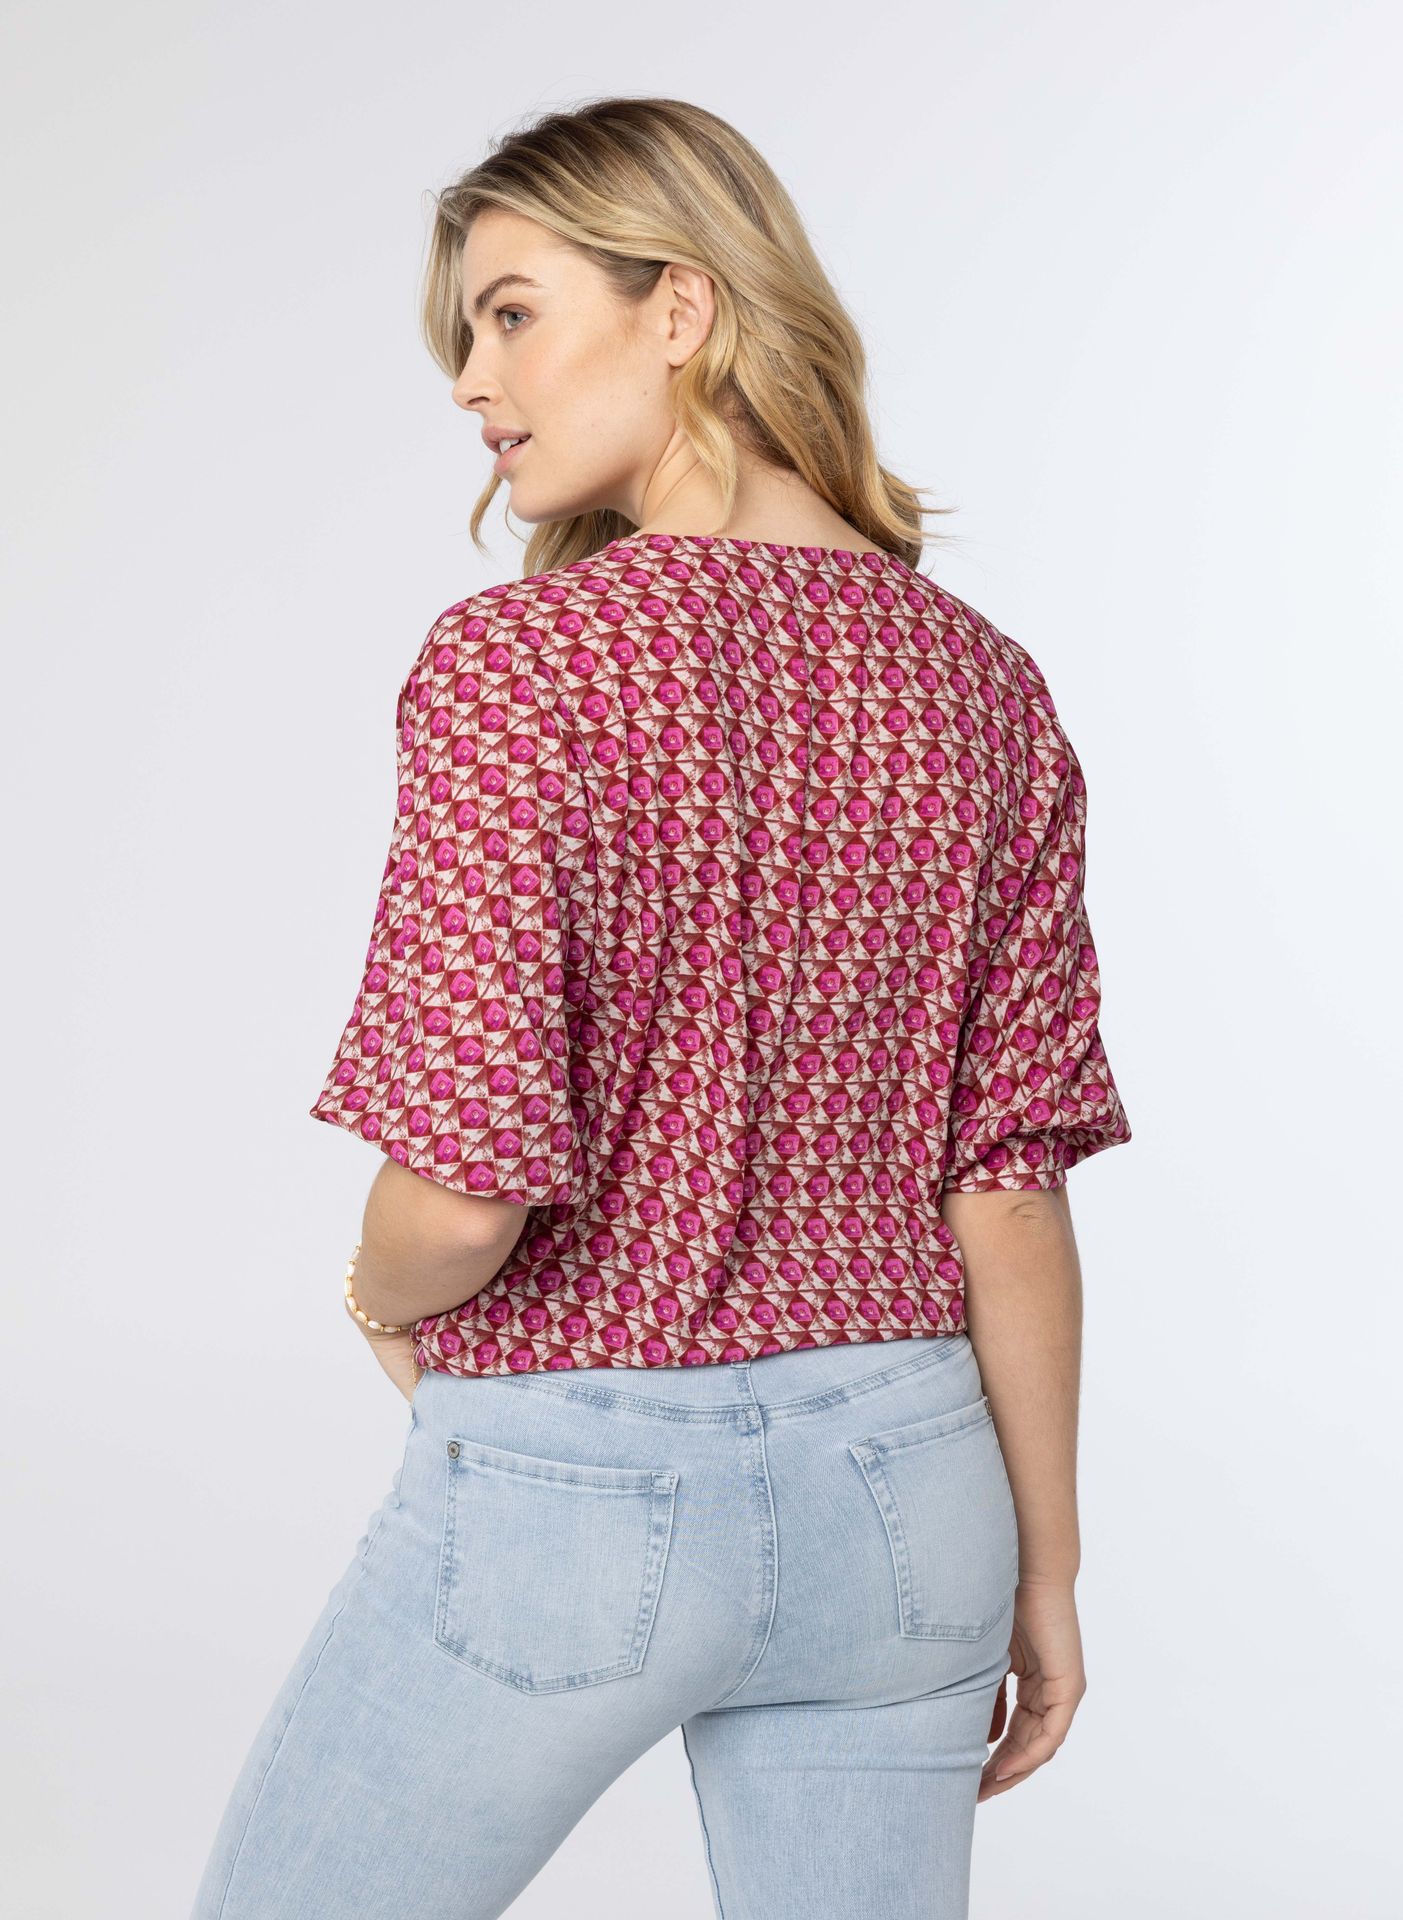 Norah Meerkleurige blouse met strik geranium multicolor 213541-665